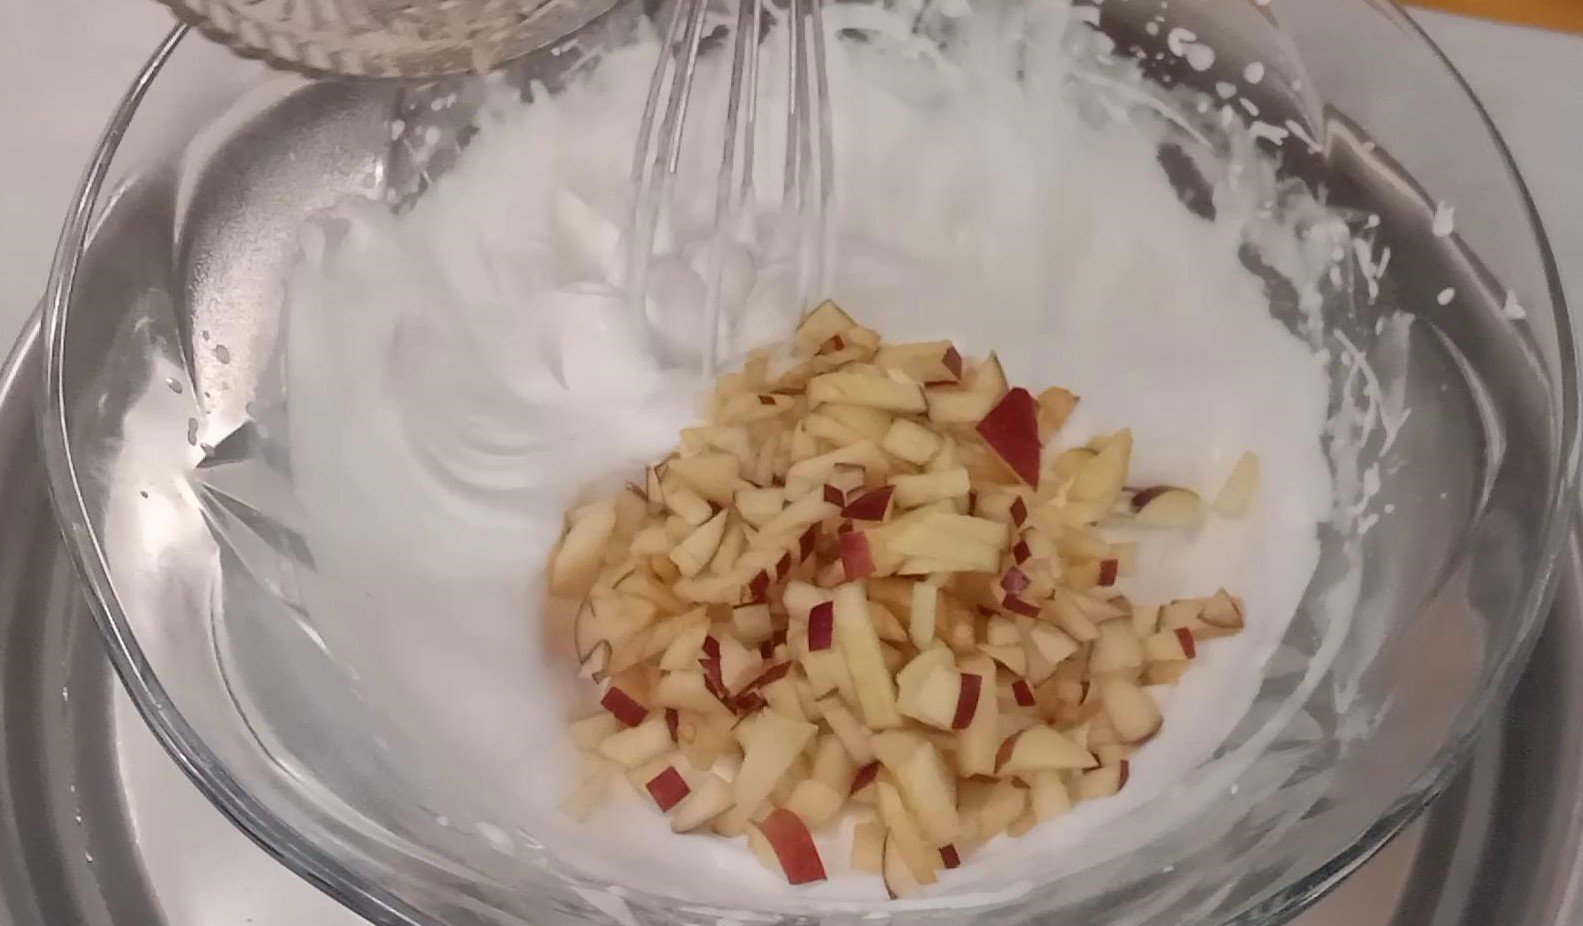 Adding chopped apple to cream, Choco Dessert.